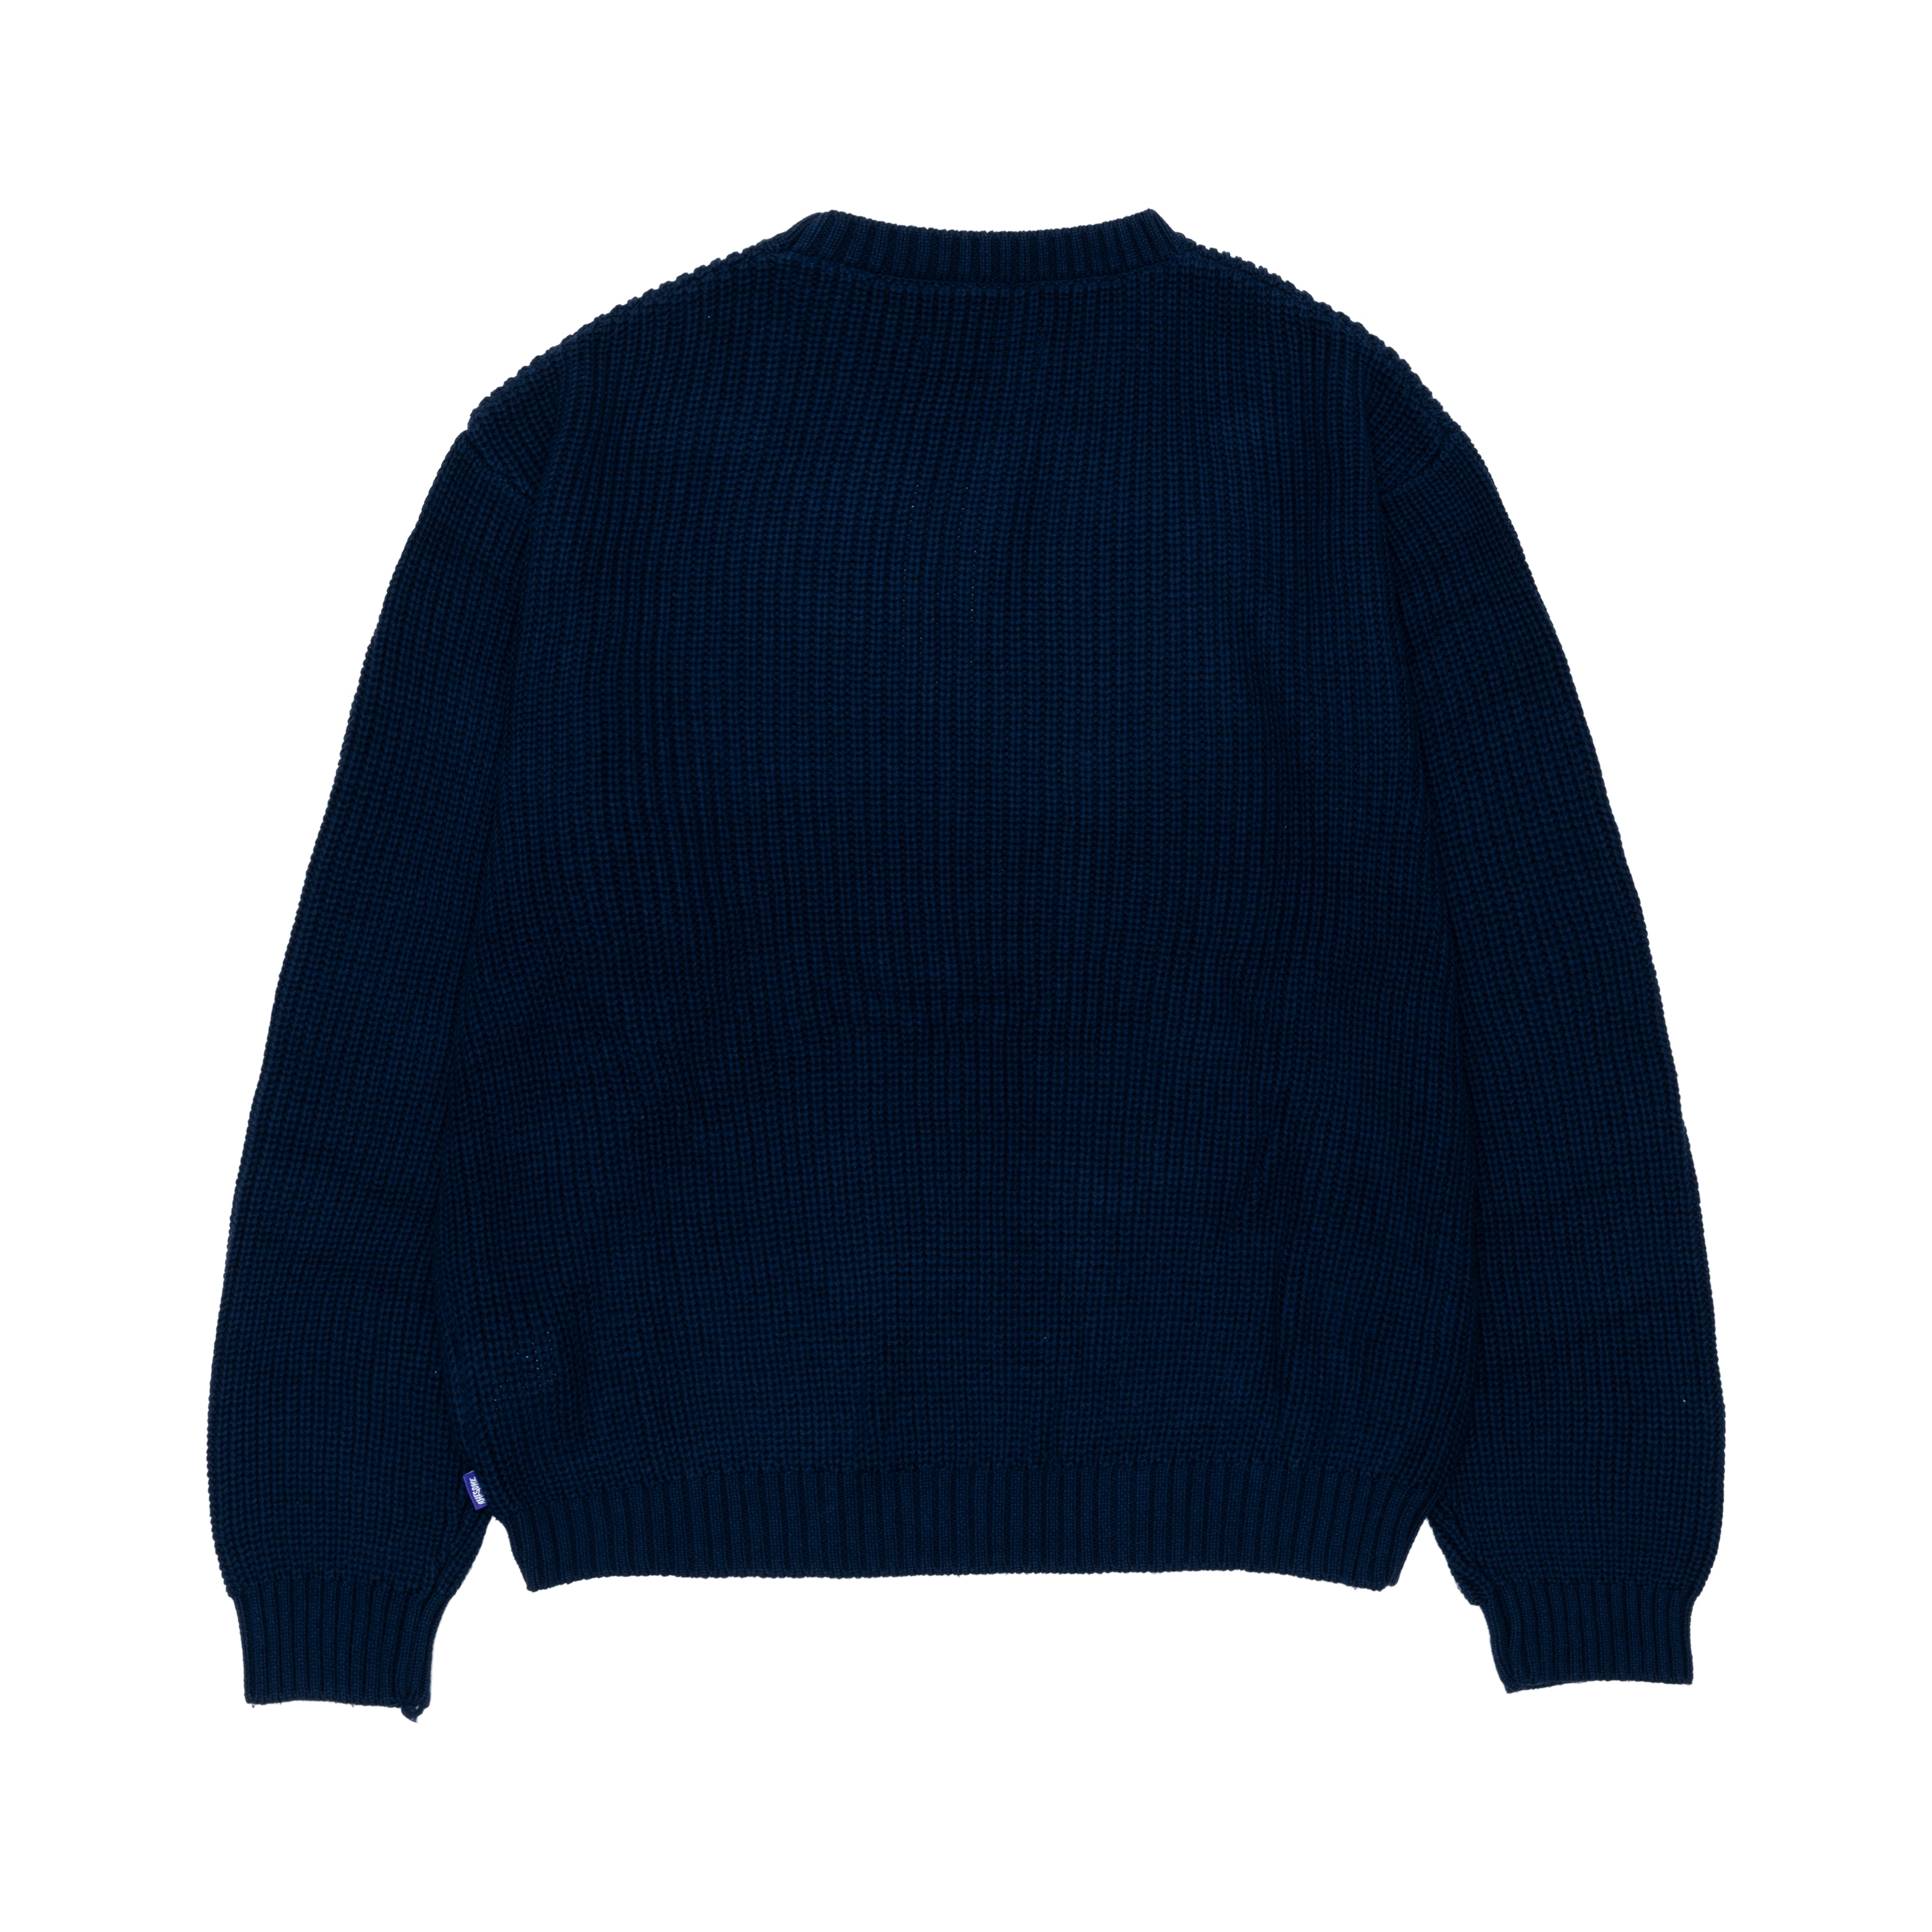 FUCKING AWESOME - Drip Logo Sweater - (Navy)